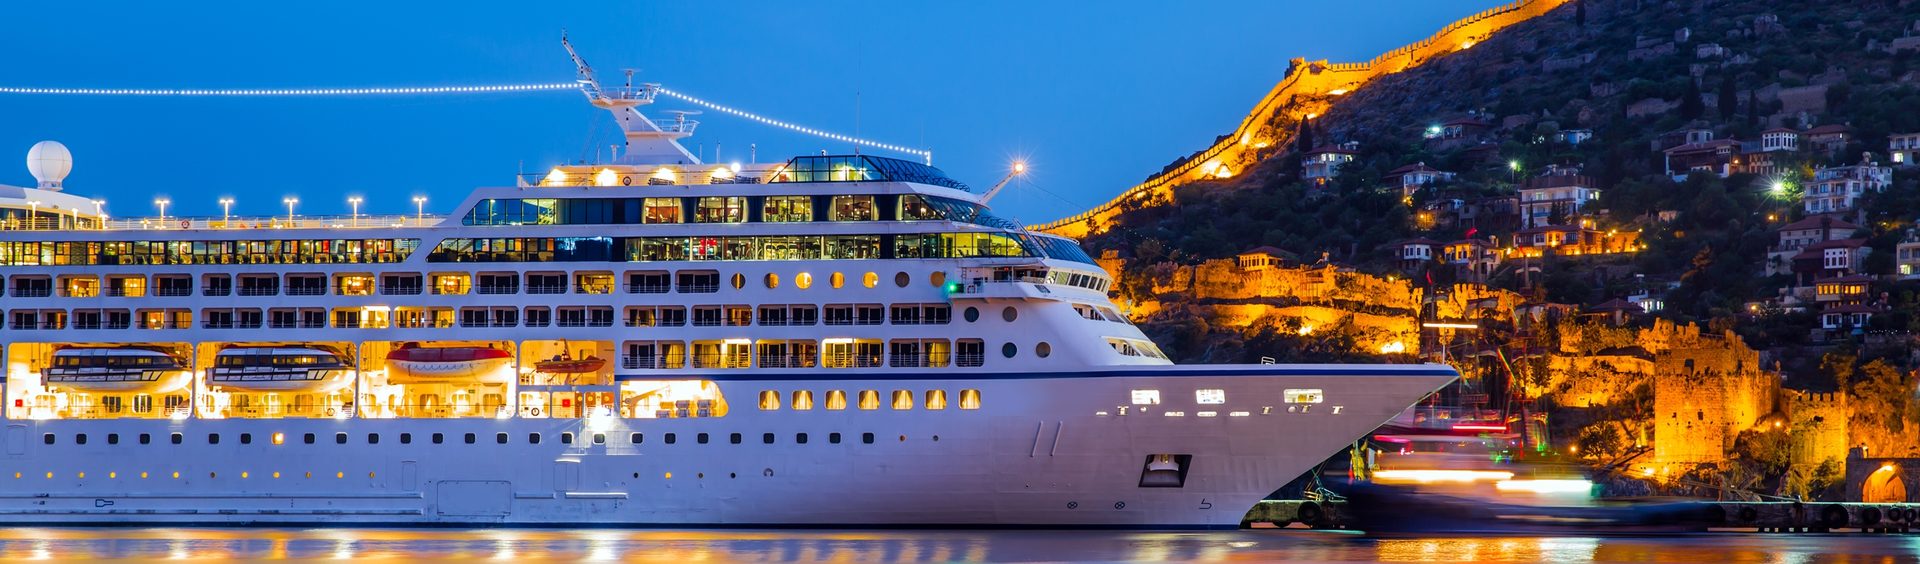 Royal Caribbean kúpila podiel v Silversea Cruises